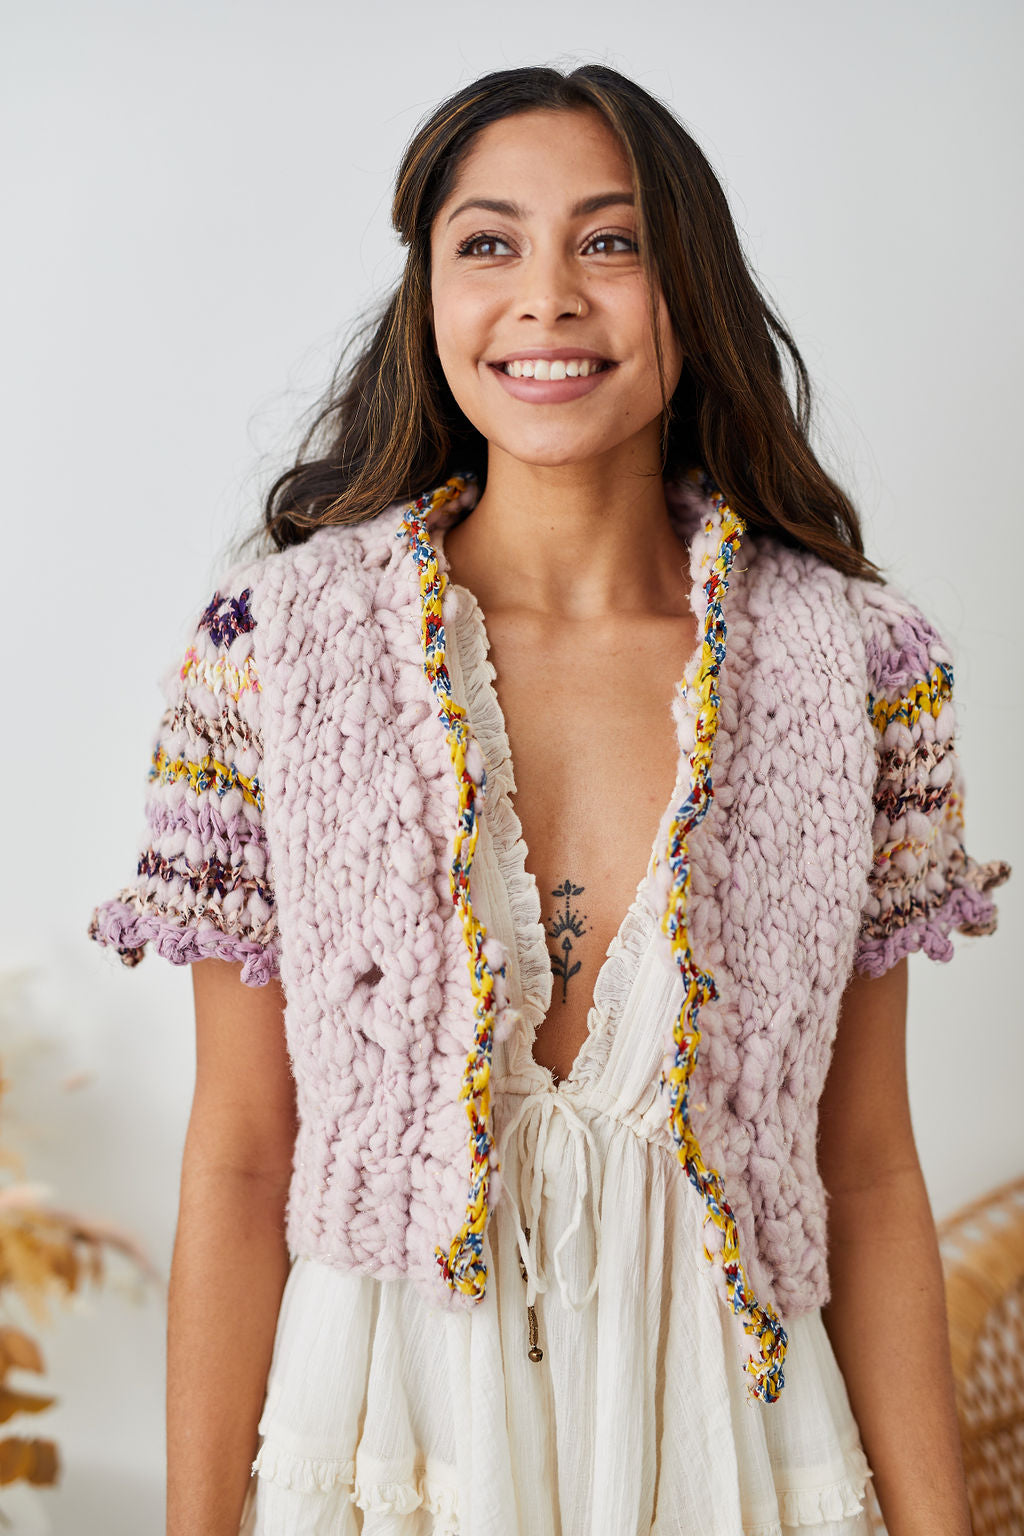 Model smiling wearing cardi over summer dress.